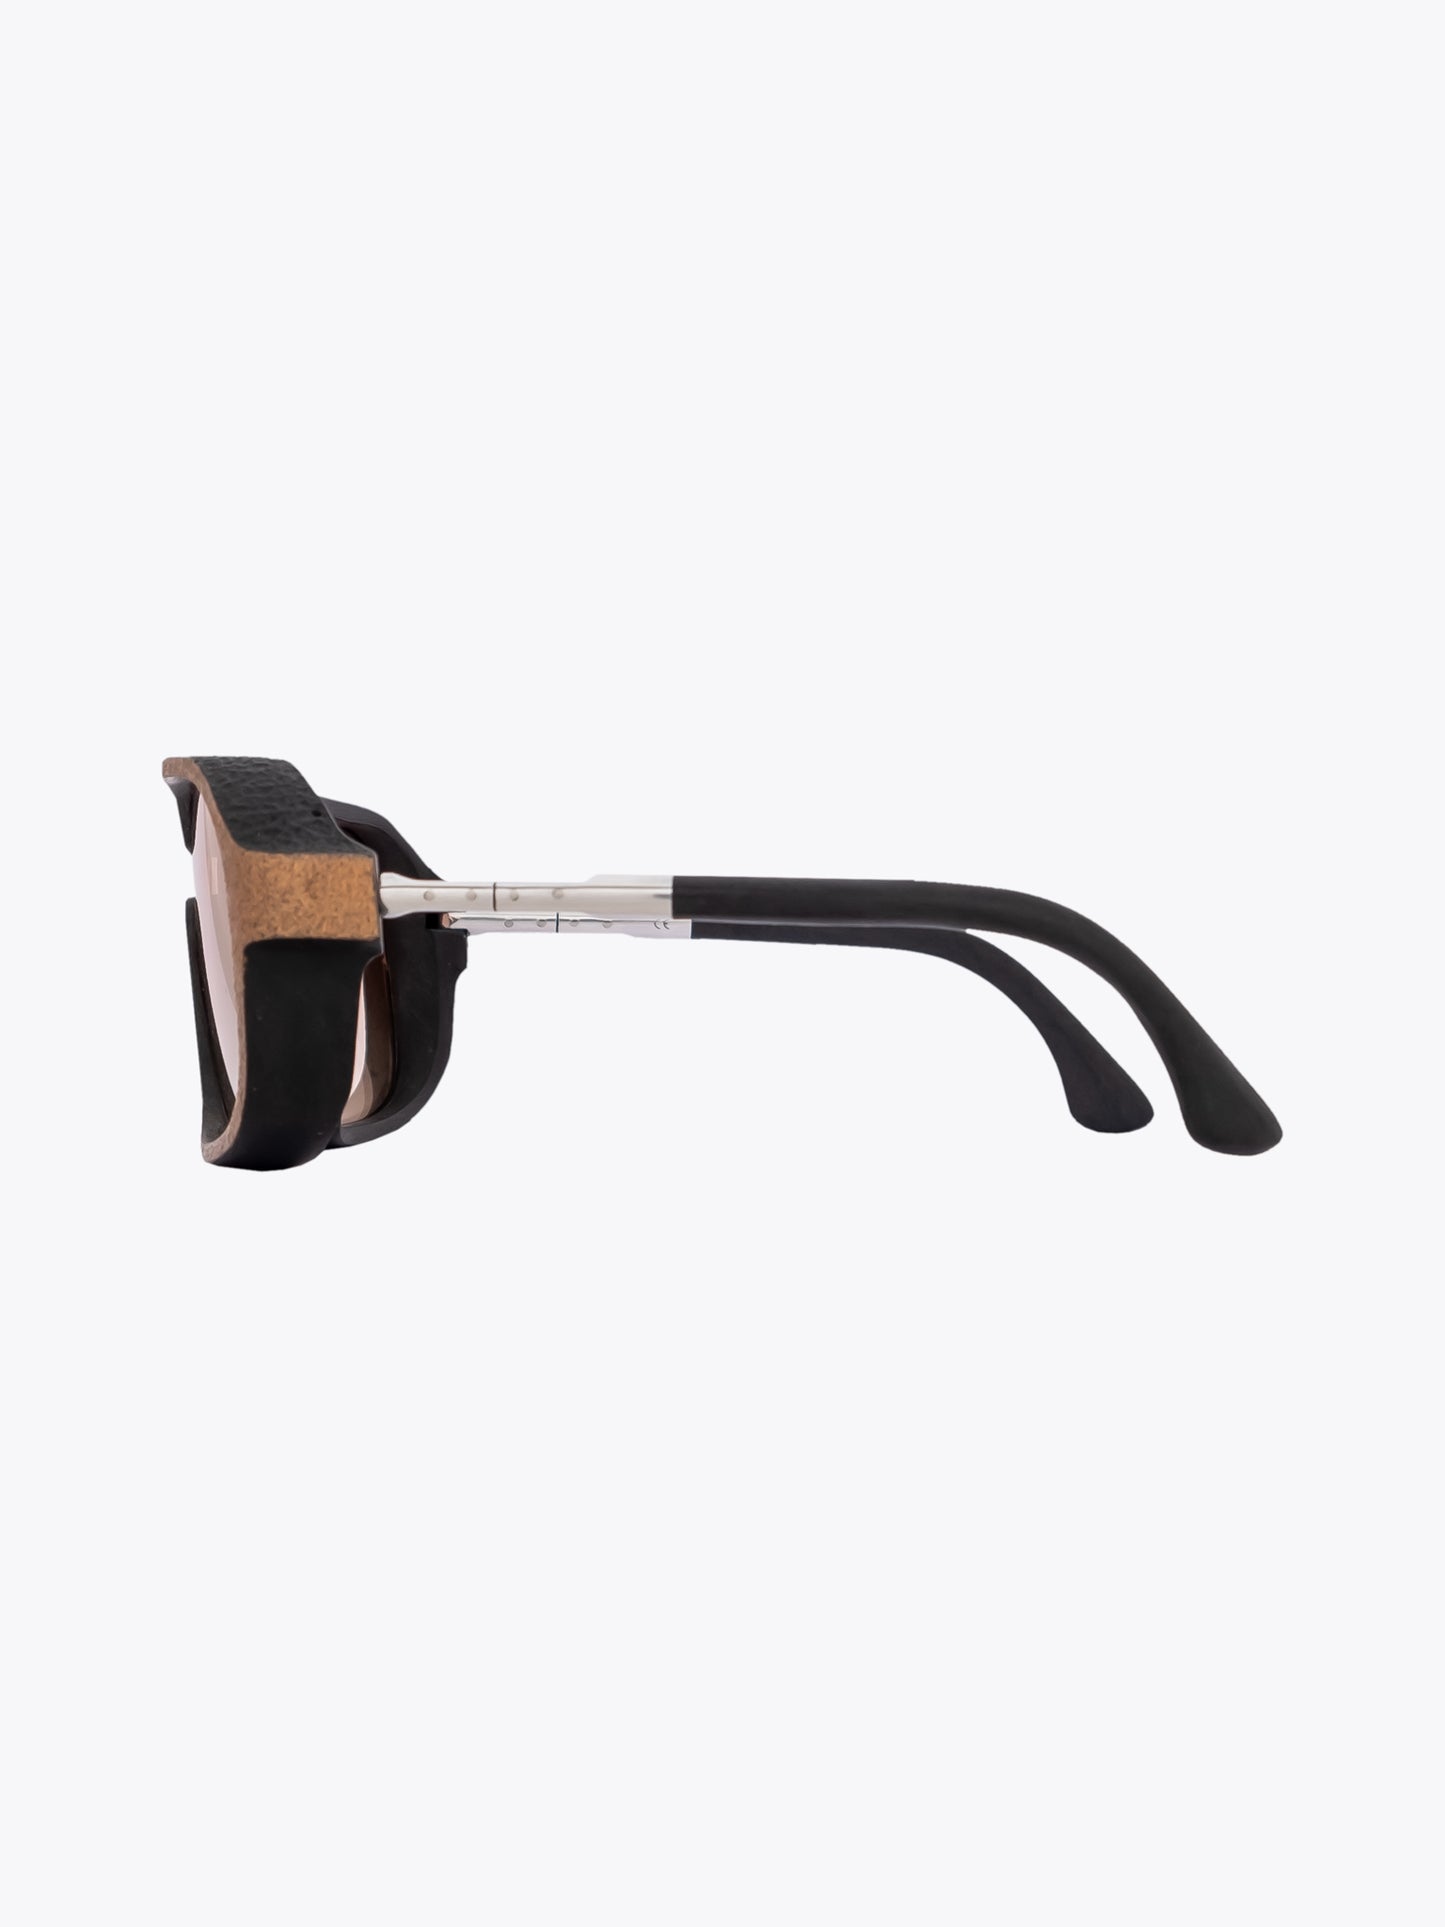 IMPURI Super Recycled Carbon Sunglasses Bronze - APODEP.com